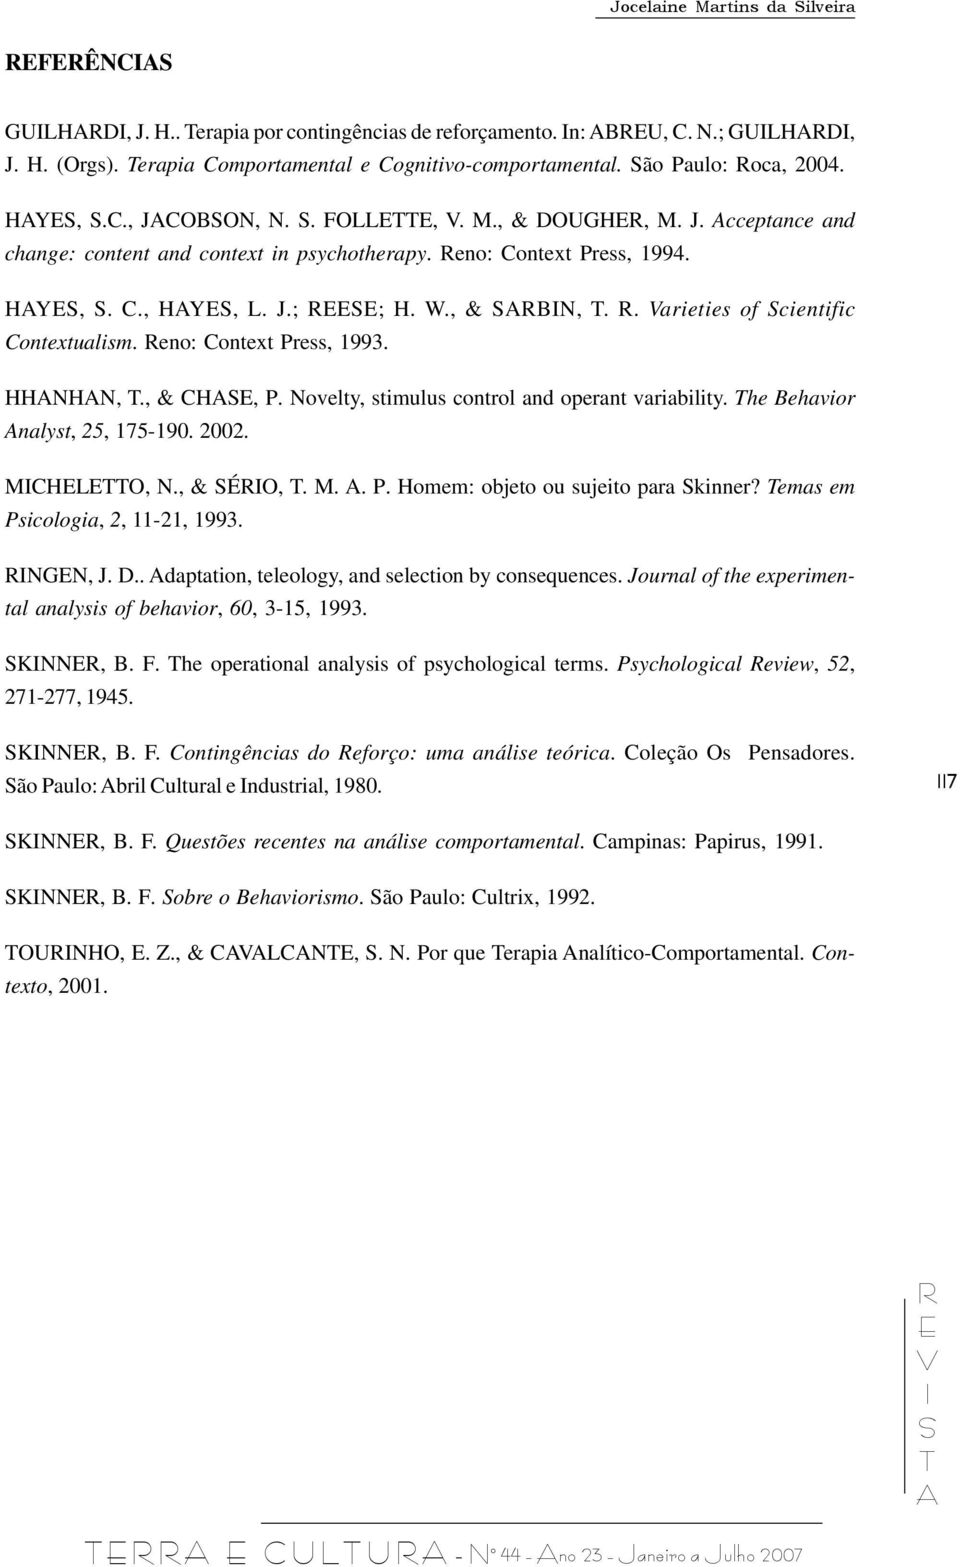 eno: Context Press, 1993. HHNHN,., & CH, P. Novelty, stimulus control and operant variability. he Behavior nalyst, 25, 175-190. 2002. MCHLO, N., & ÉO,. M.. P. Homem: objeto ou sujeito para kinner?